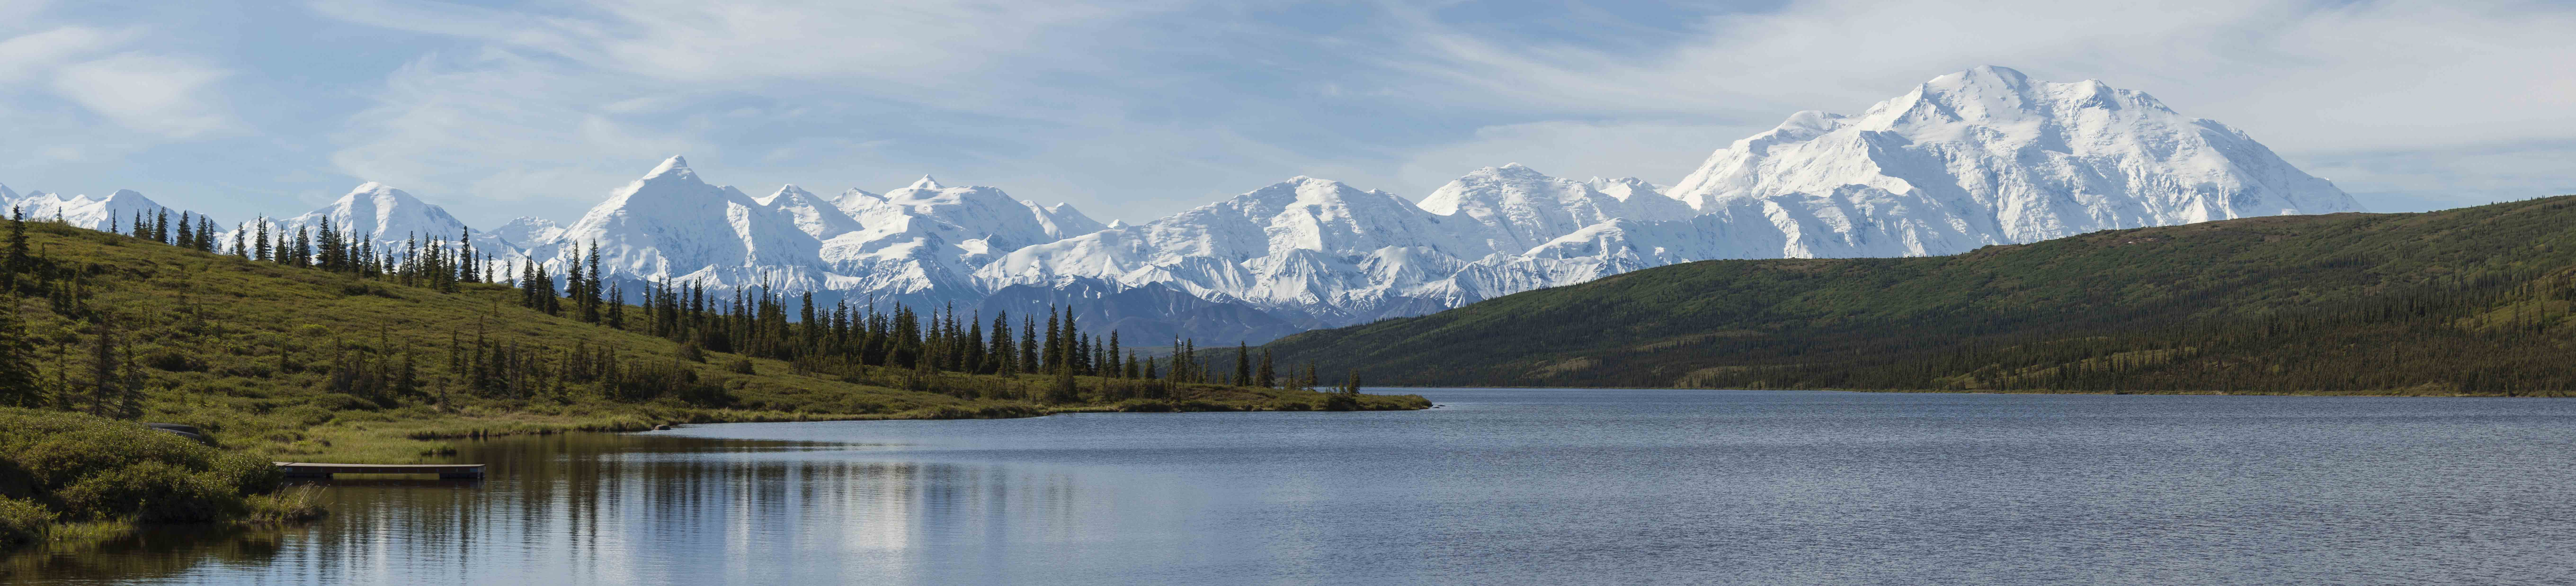 Alaska : explorer le nord des Etats-Unis